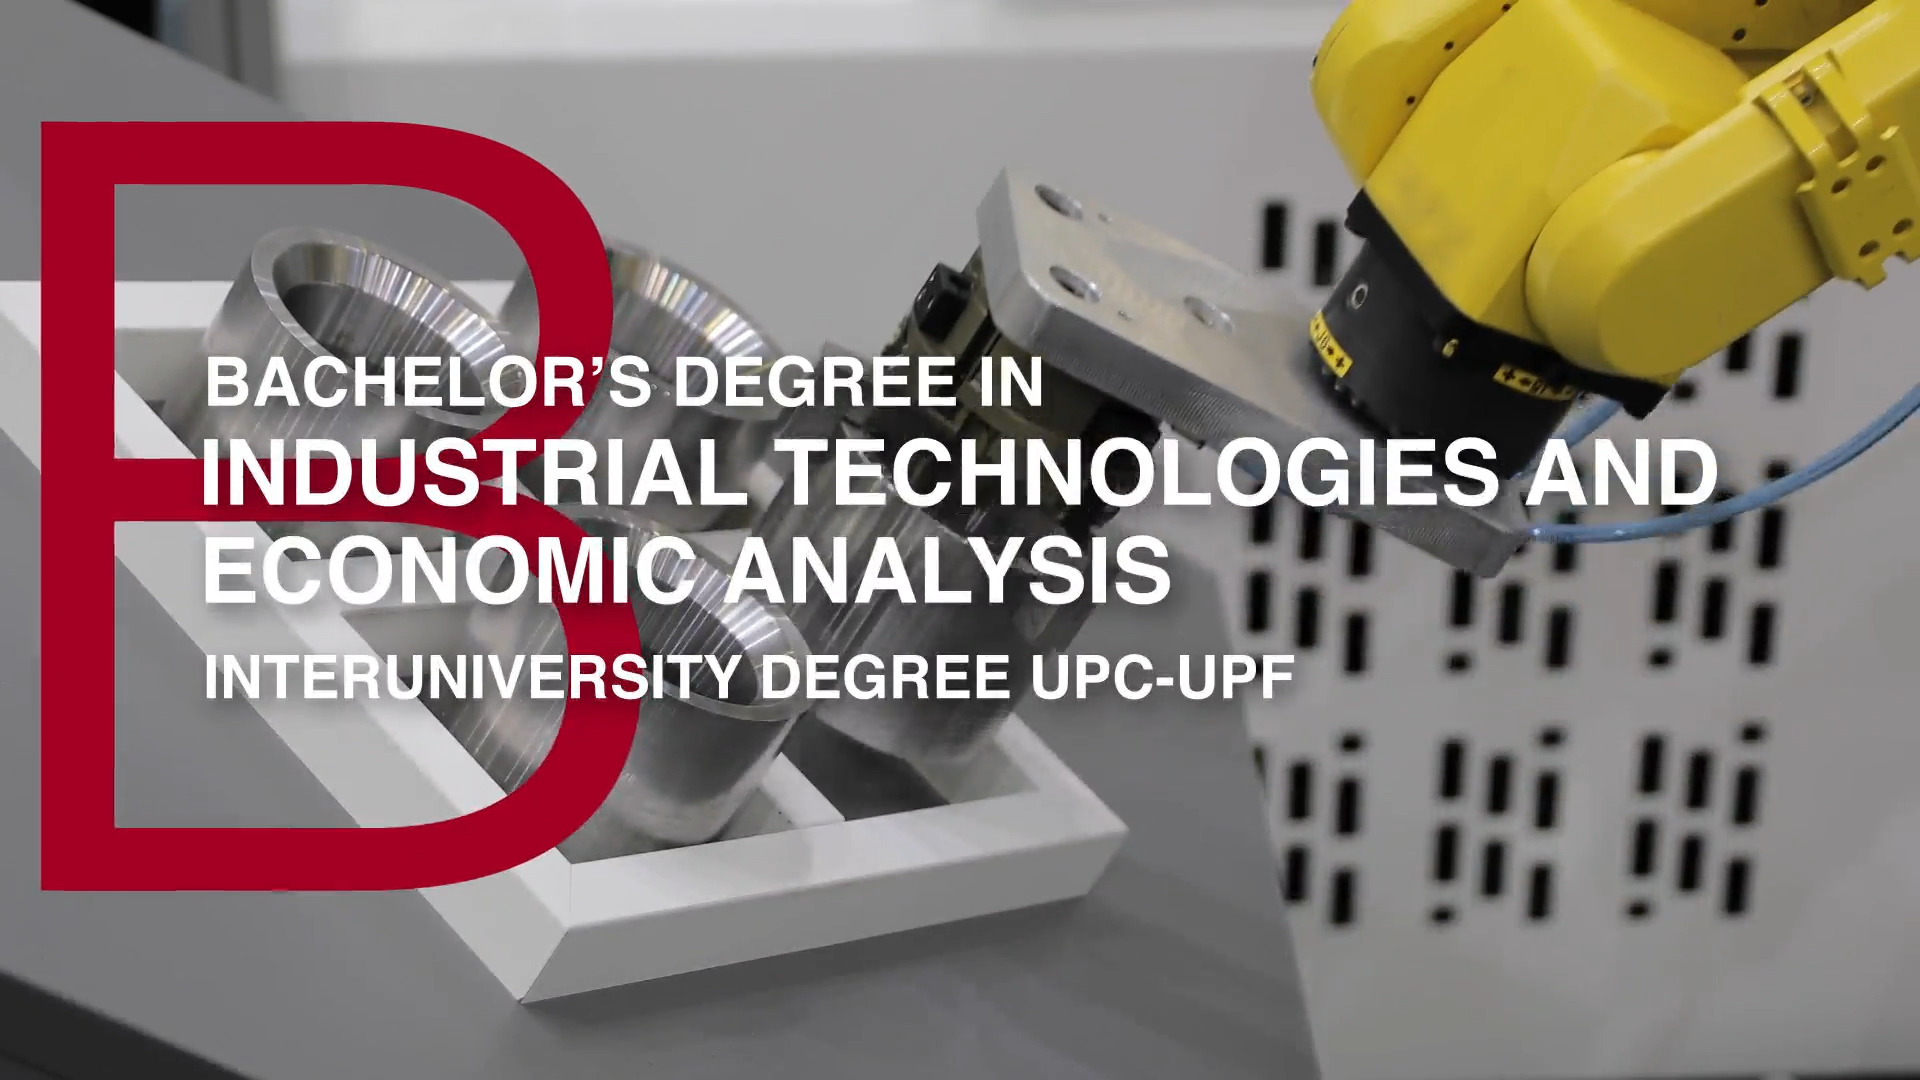 Estudia el Bachelor's Degree in Industrial Technologies and Economic Analysis (Interuniversity degree UPC-UPF) en la ETSEIB